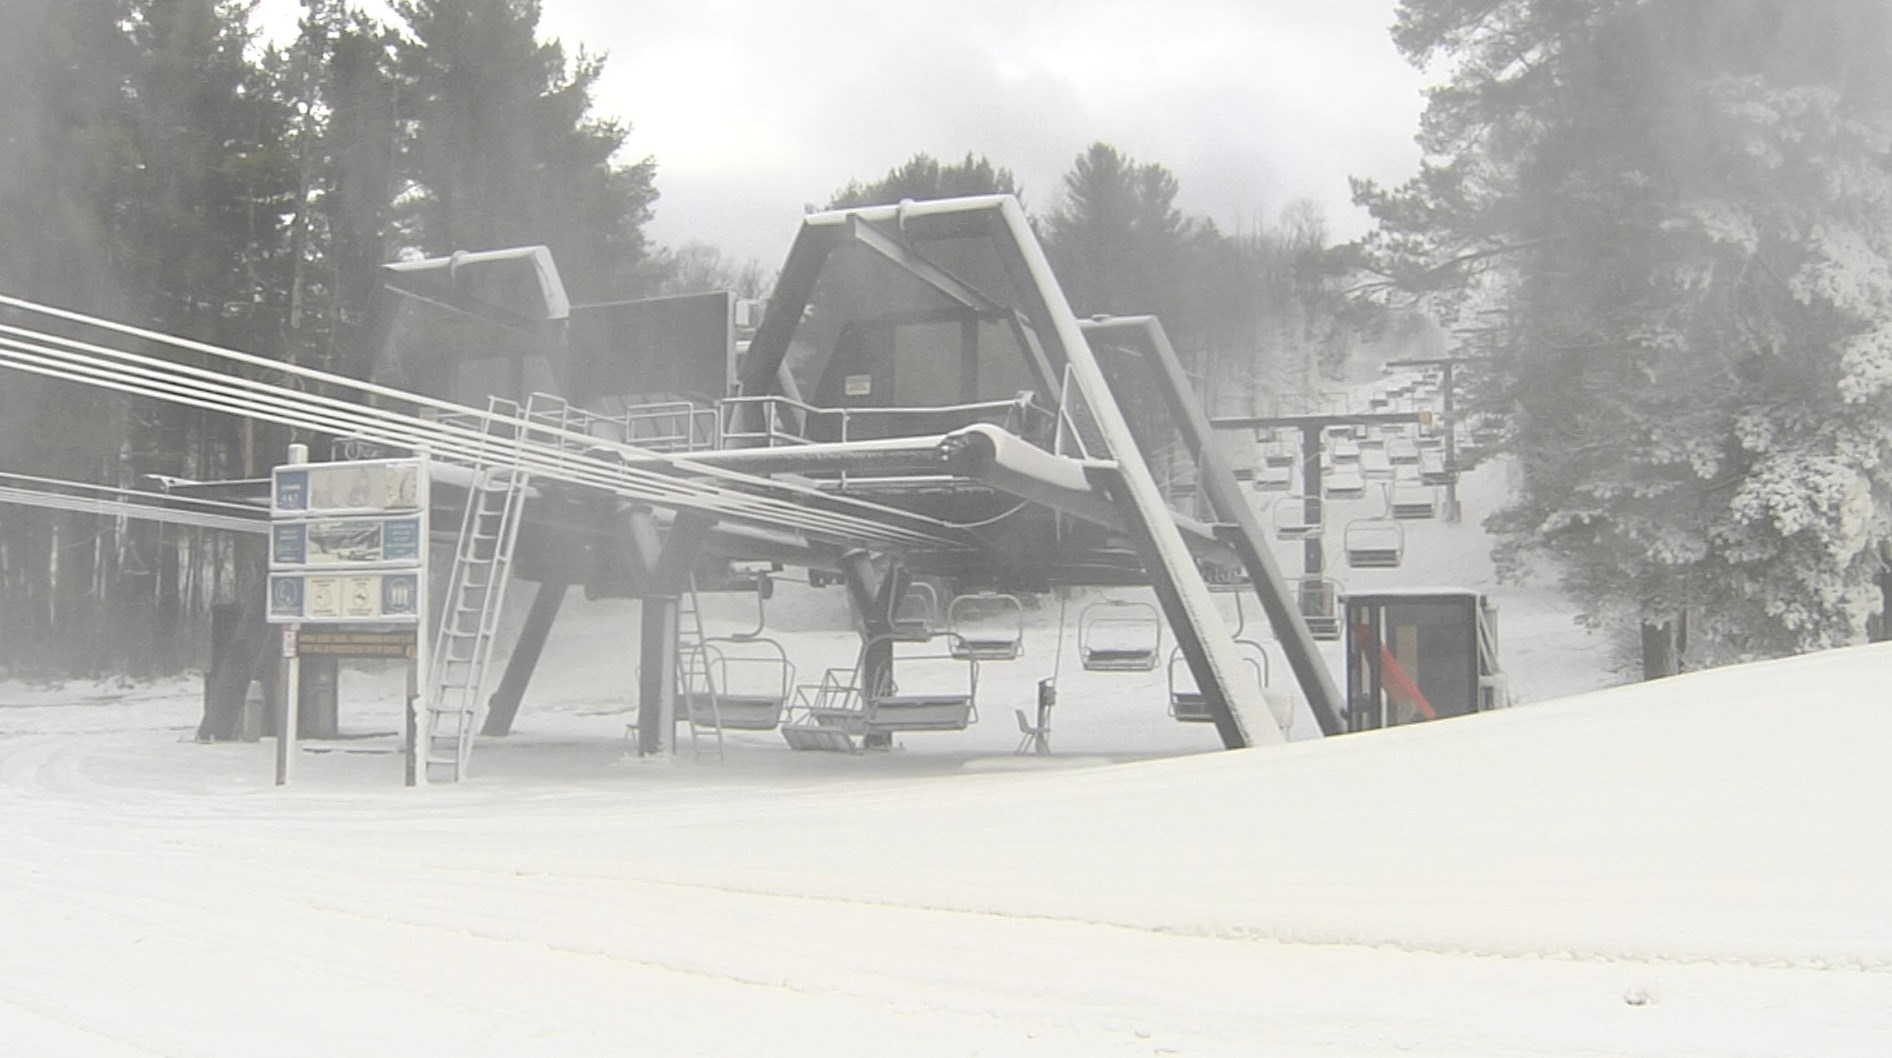 Peek'n Peak Resort Announces December 18 Start to Ski Season